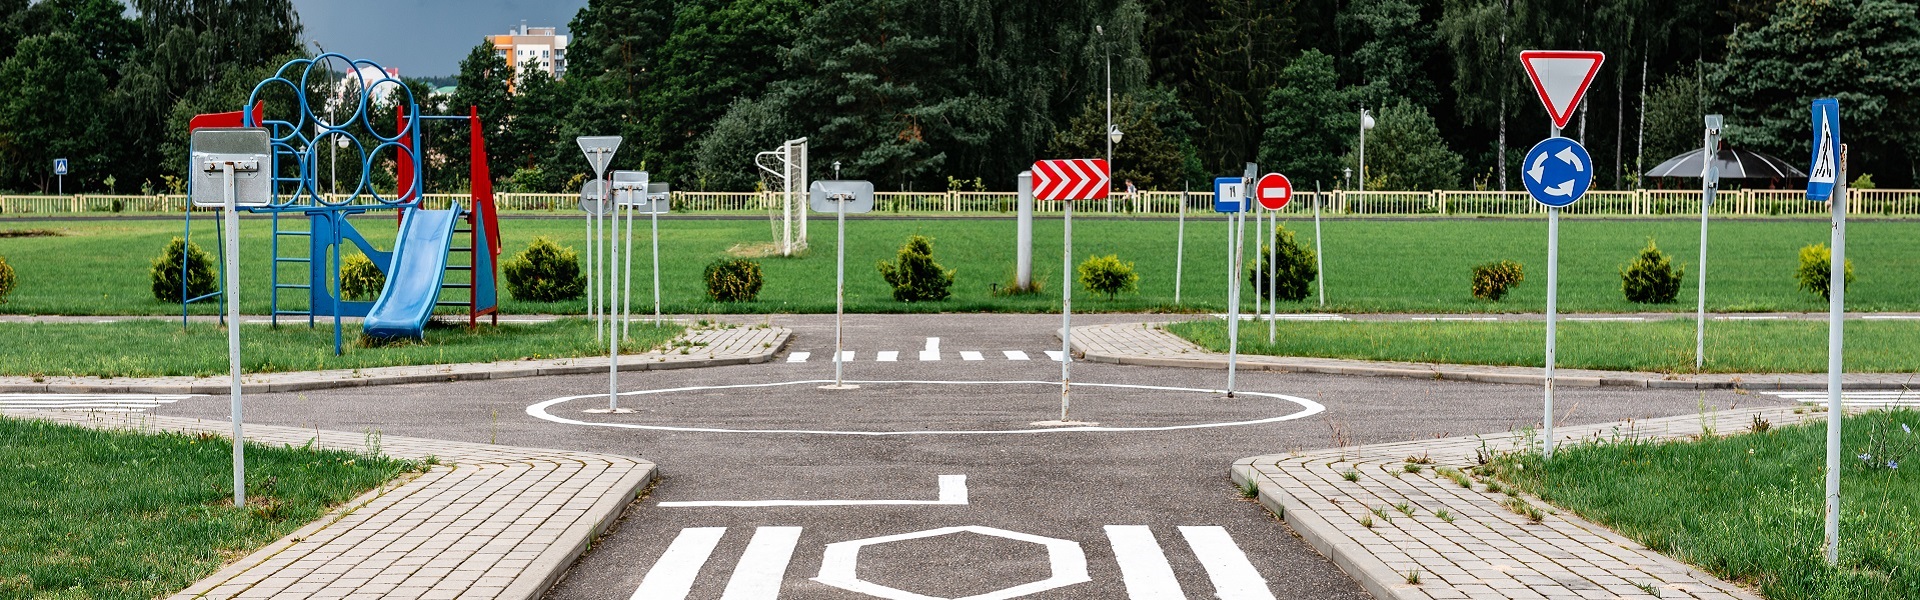 Rent a Car Belgrade Airport | Driving school Zurich and Oerlikon